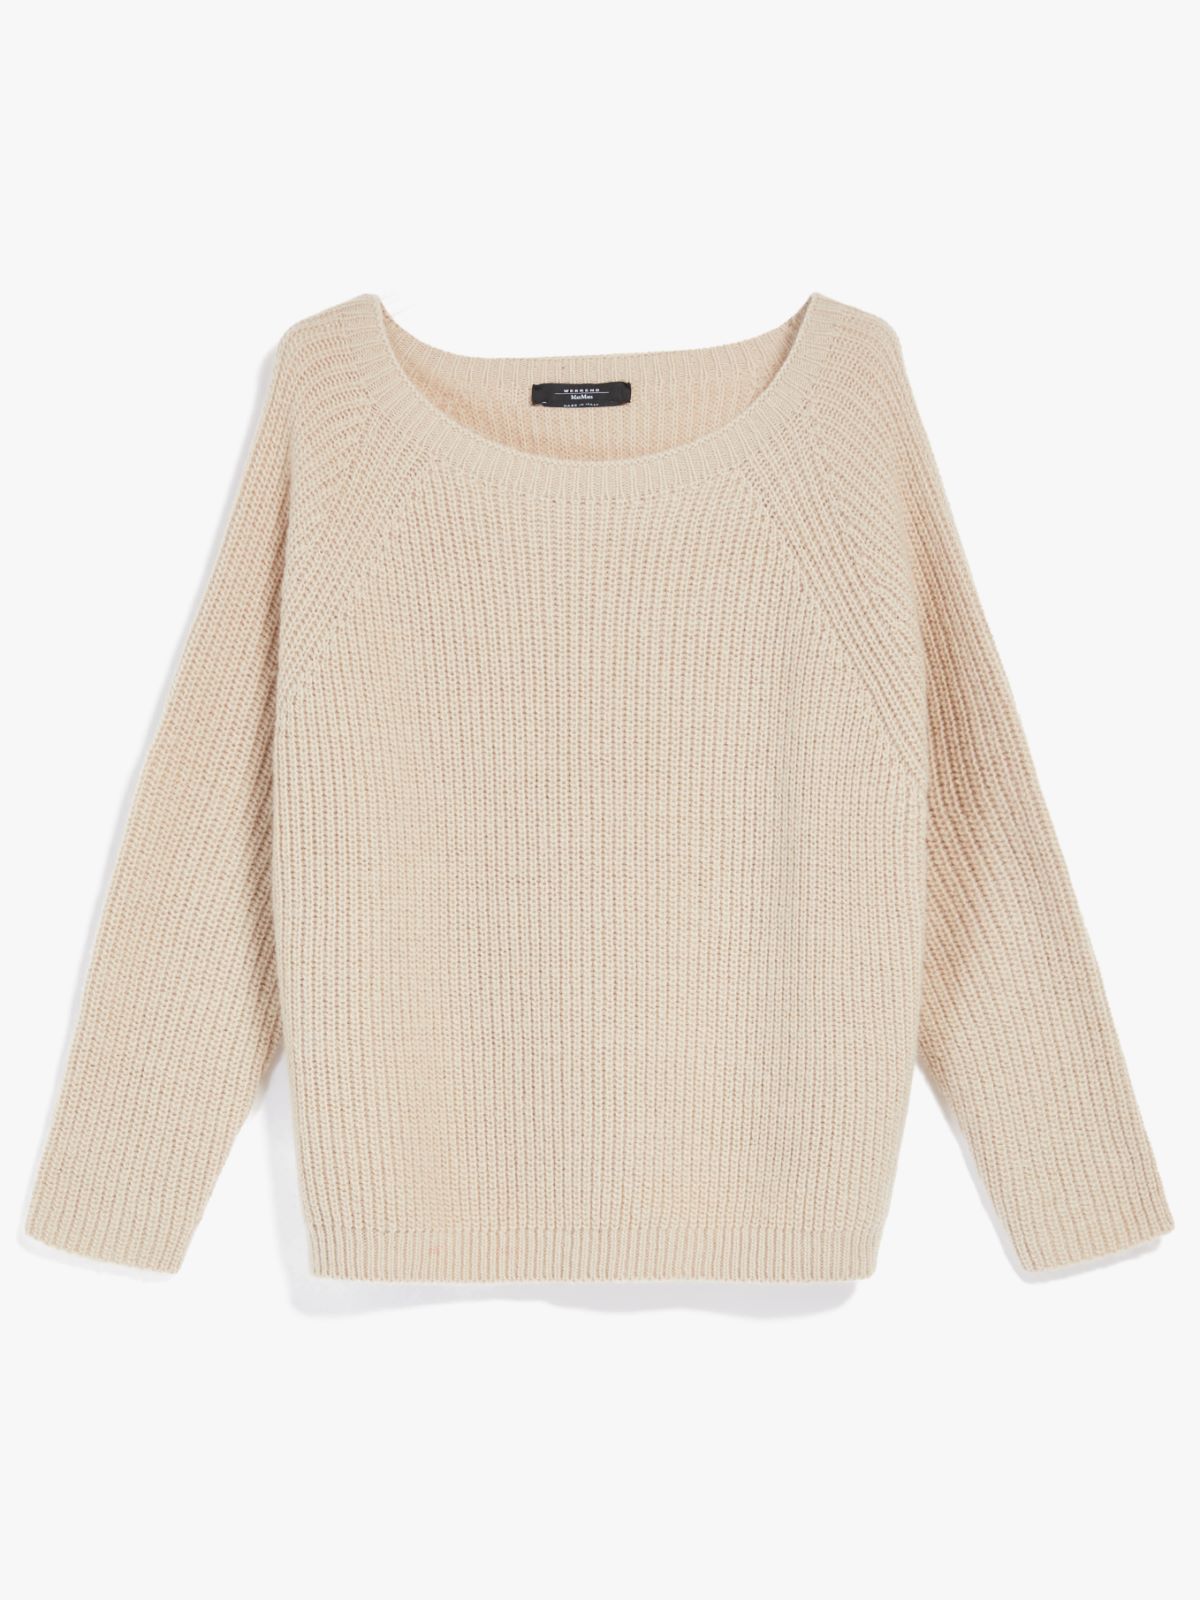 Mohair yarn sweater - BEIGE - Weekend Max Mara - 6